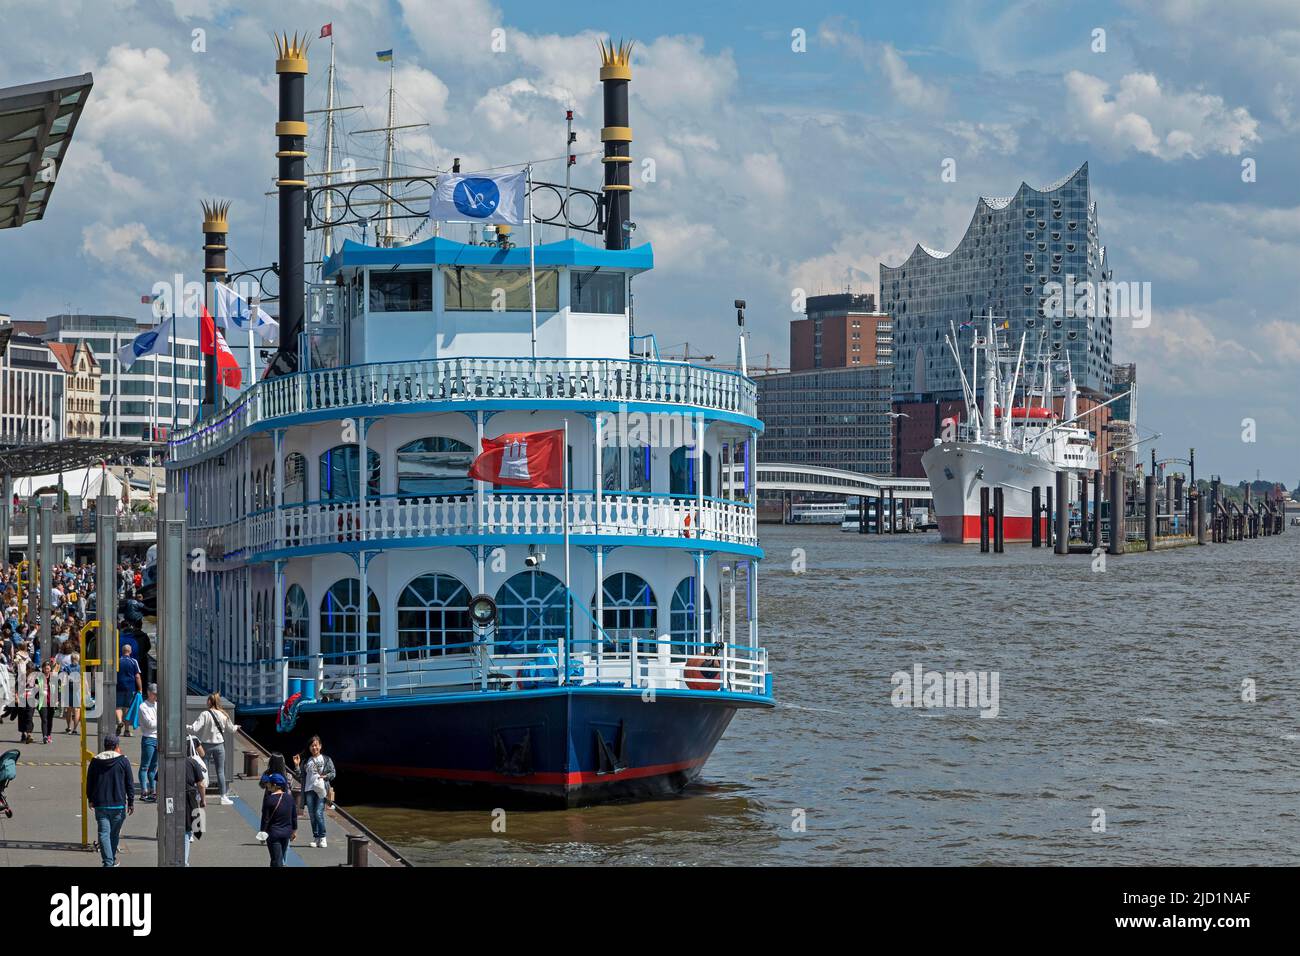 Paddle steamer Louisiana Star, Elbe Philharmonic Hall, Landungsbruecken, Harbour, Hamburg, Germany Stock Photo